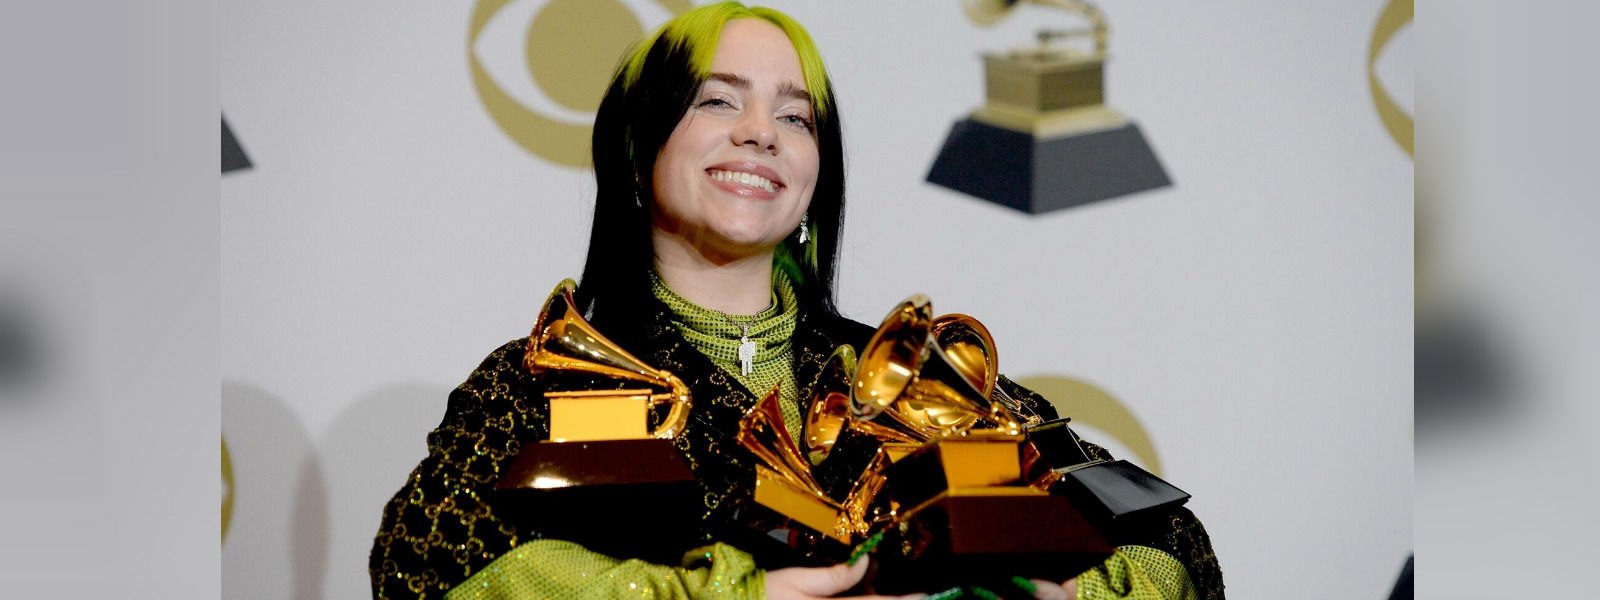 Billie Eilish sweeps Grammy Awards with top 4 prizes